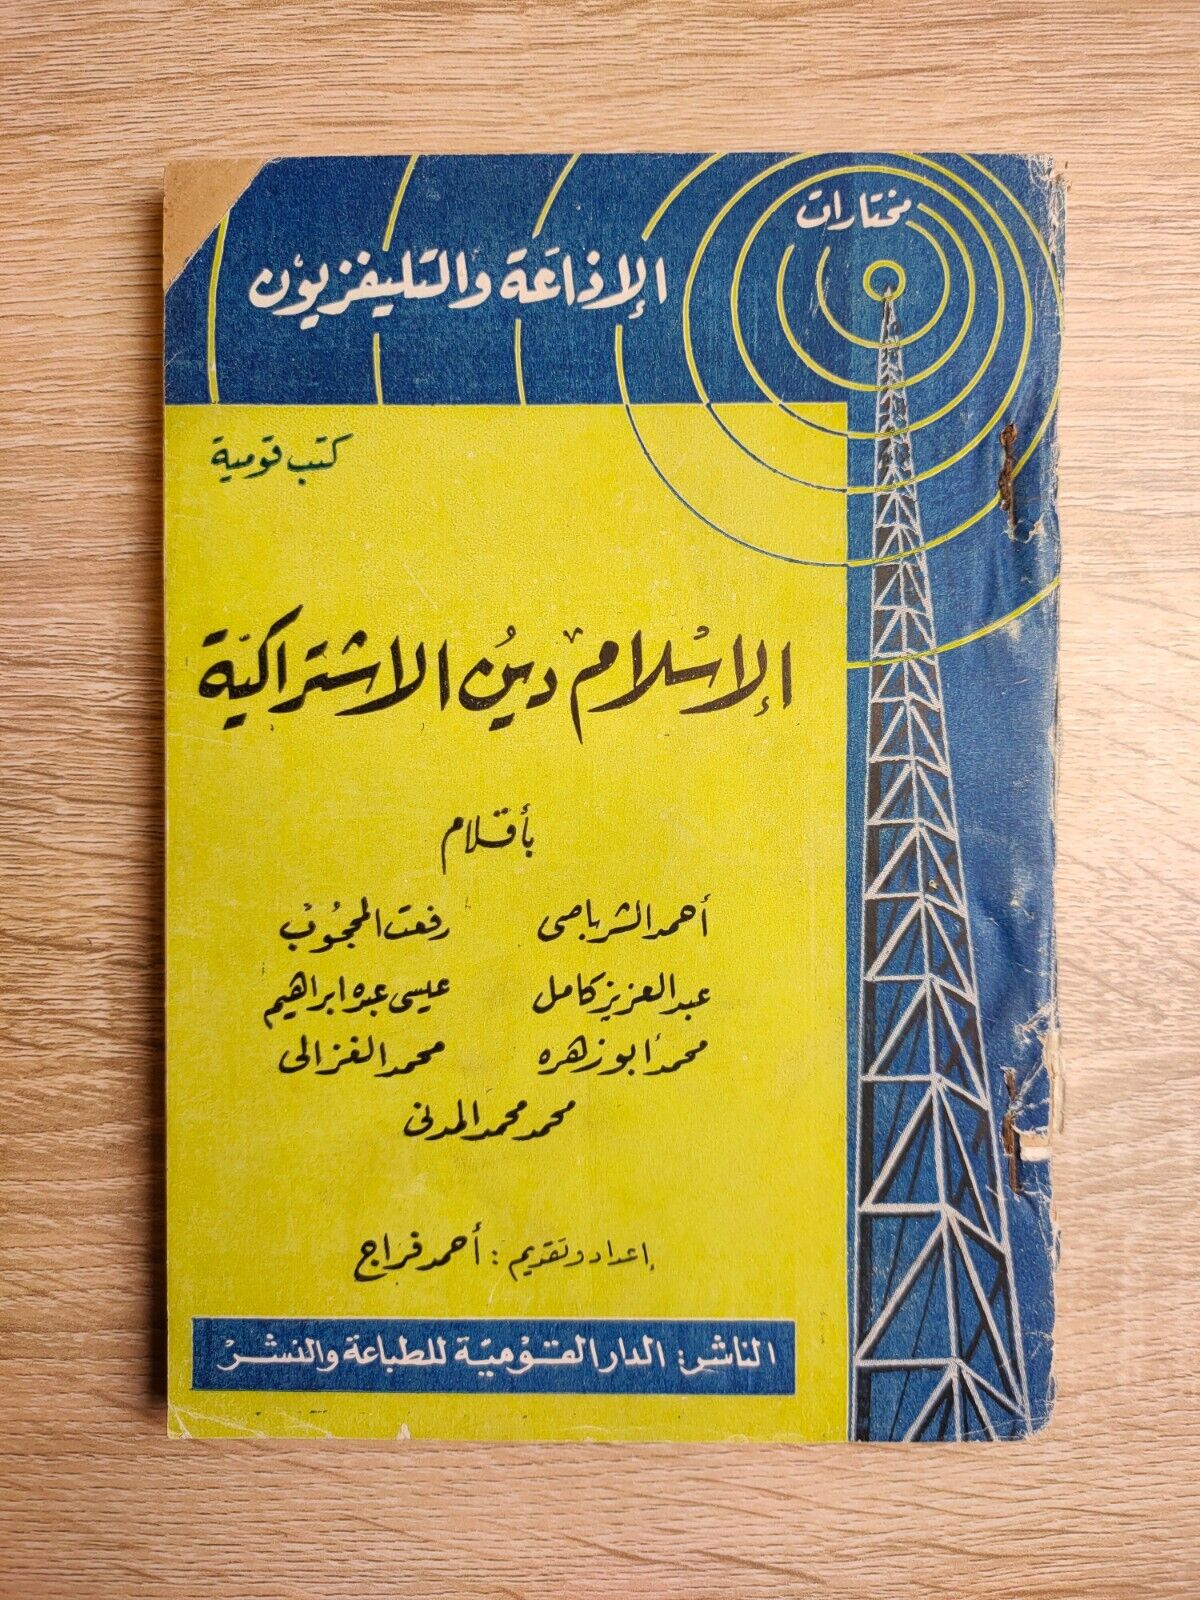 1961 Vintage Islamic Islam religion socialism الإسلام دين الإشتراكية السياسة 📚